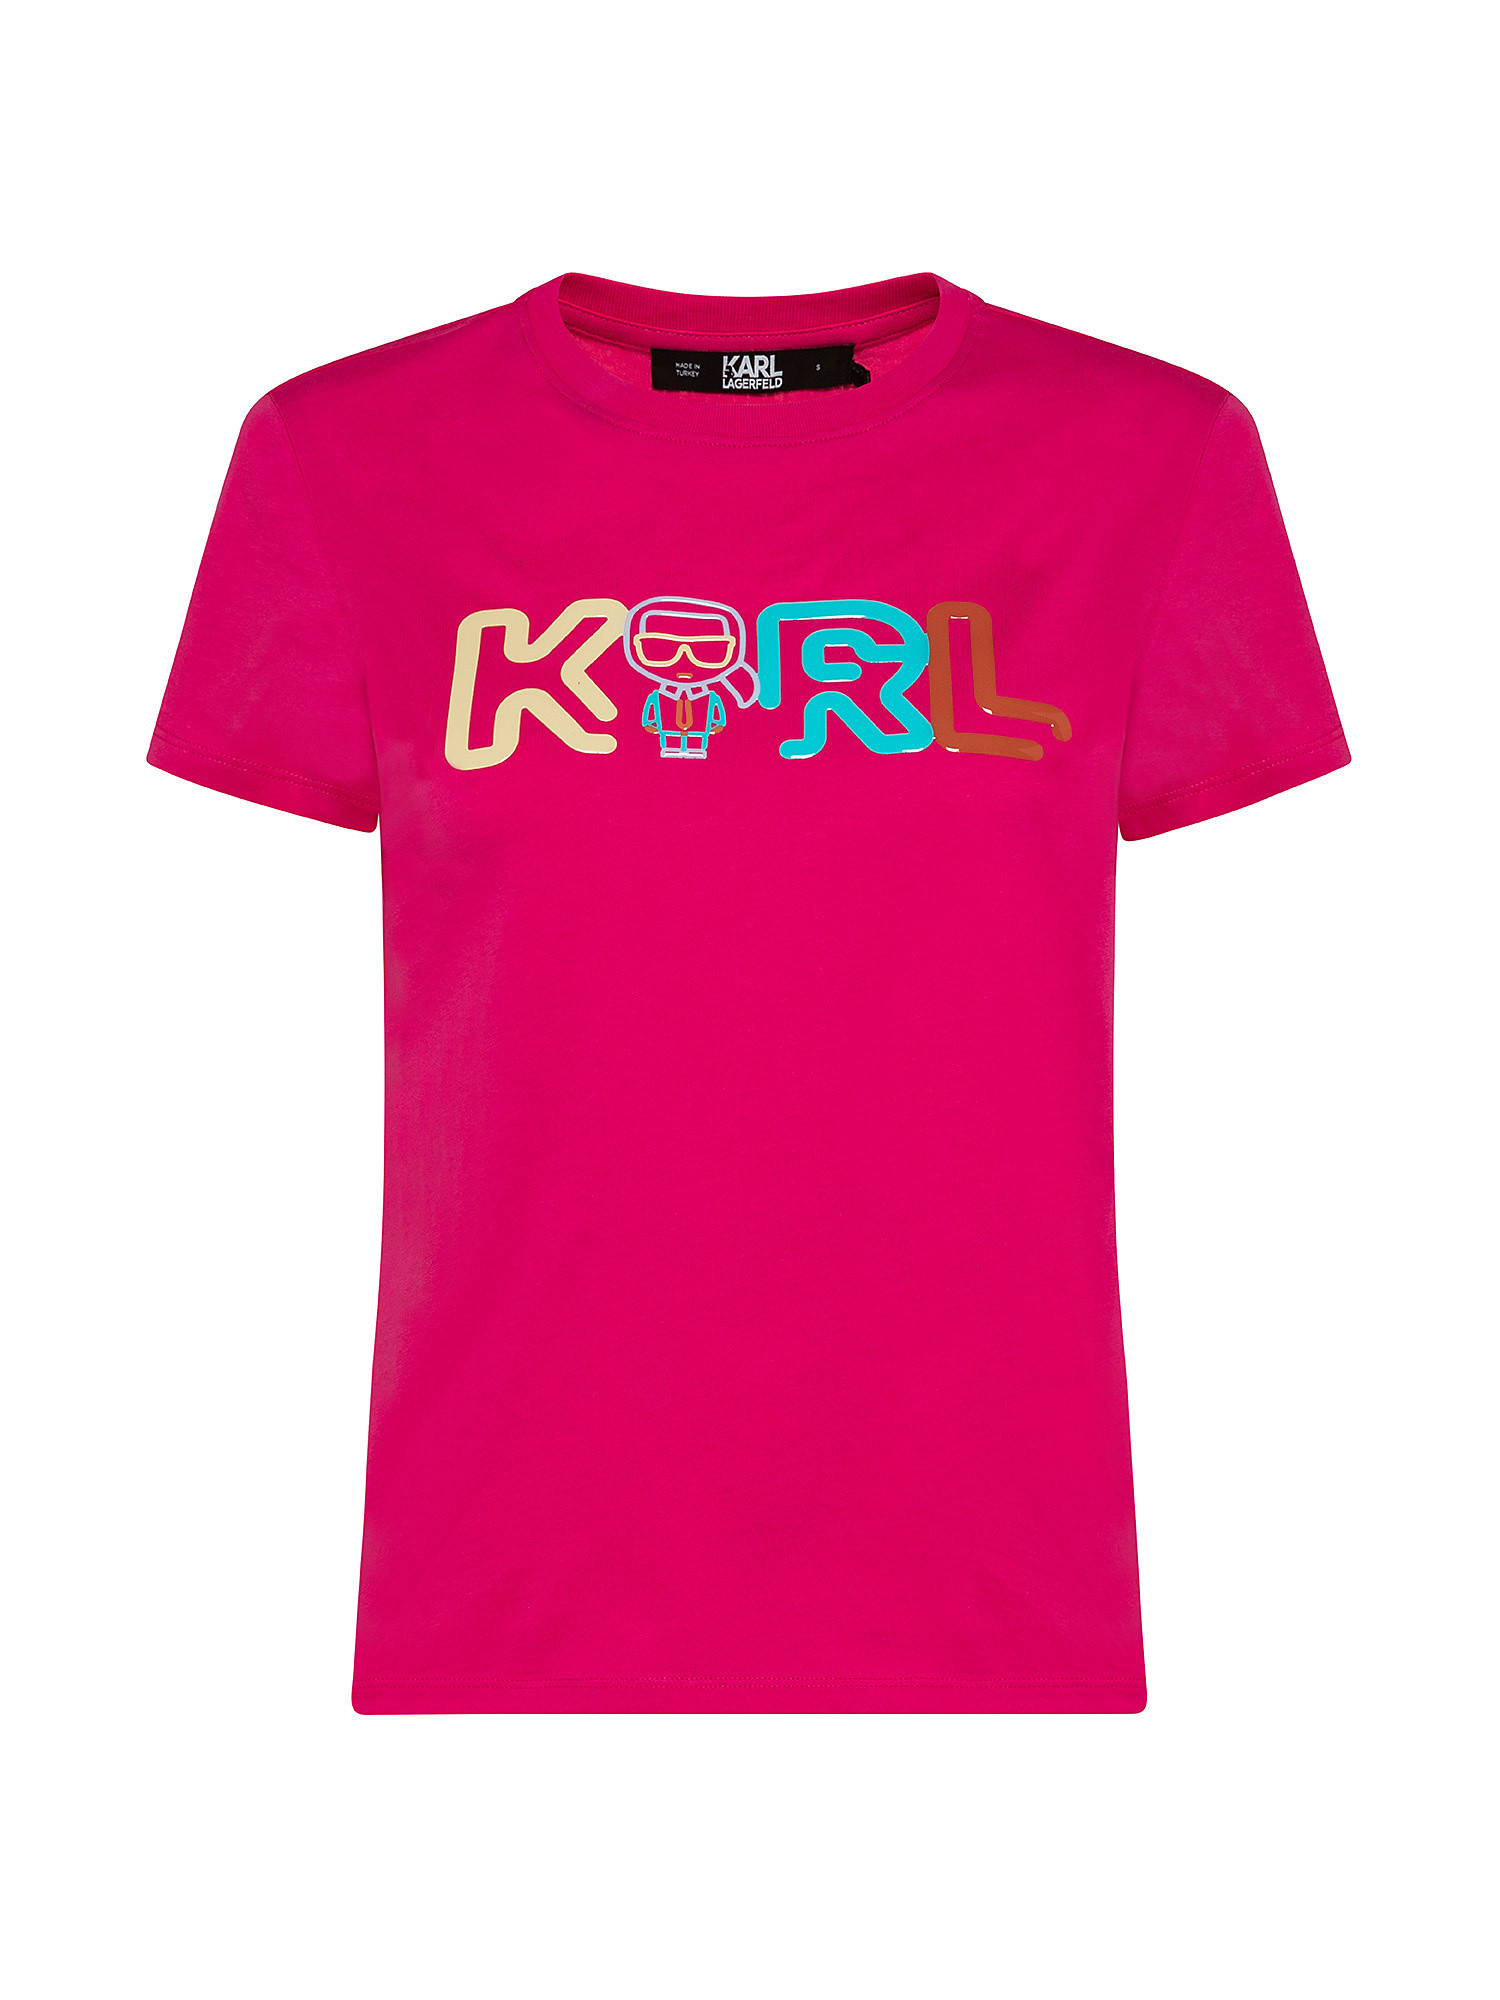 T-shirt Jelly Mini Karl Logo, Rosa fuxia, large image number 0